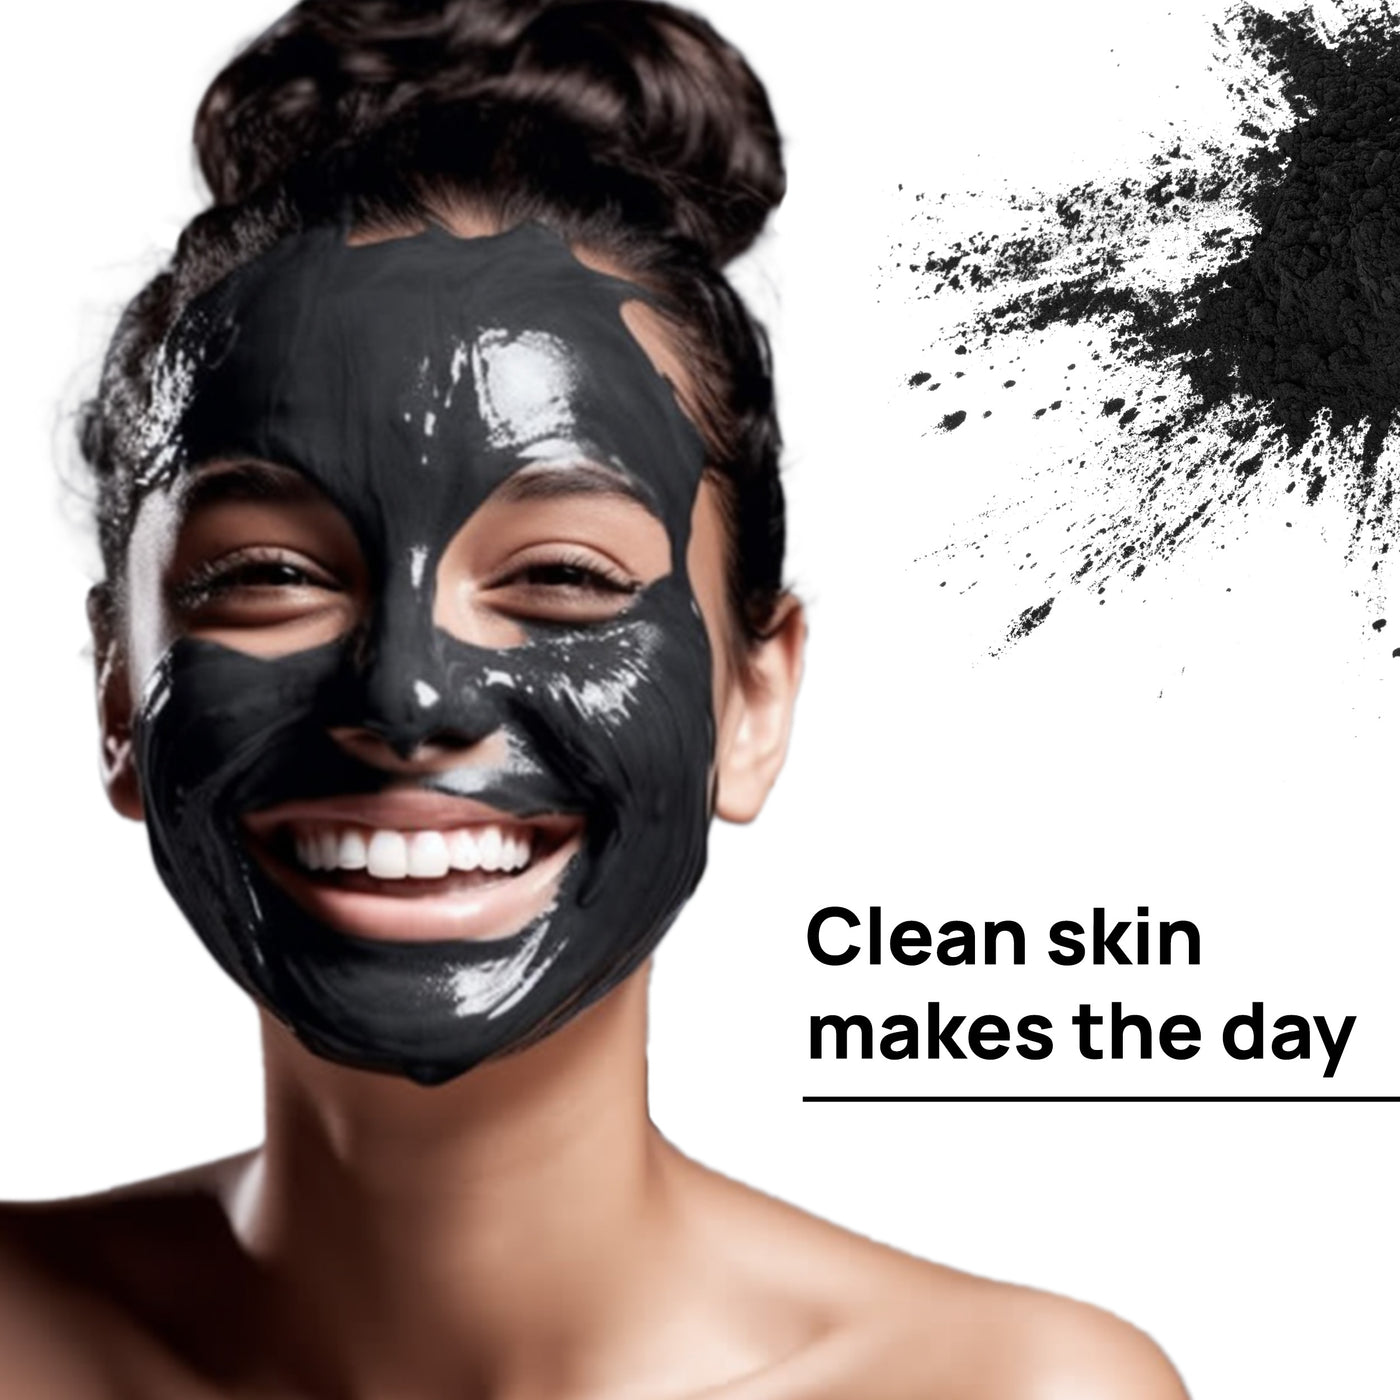 Skin Purifying Peel Off Mask - Charcoal